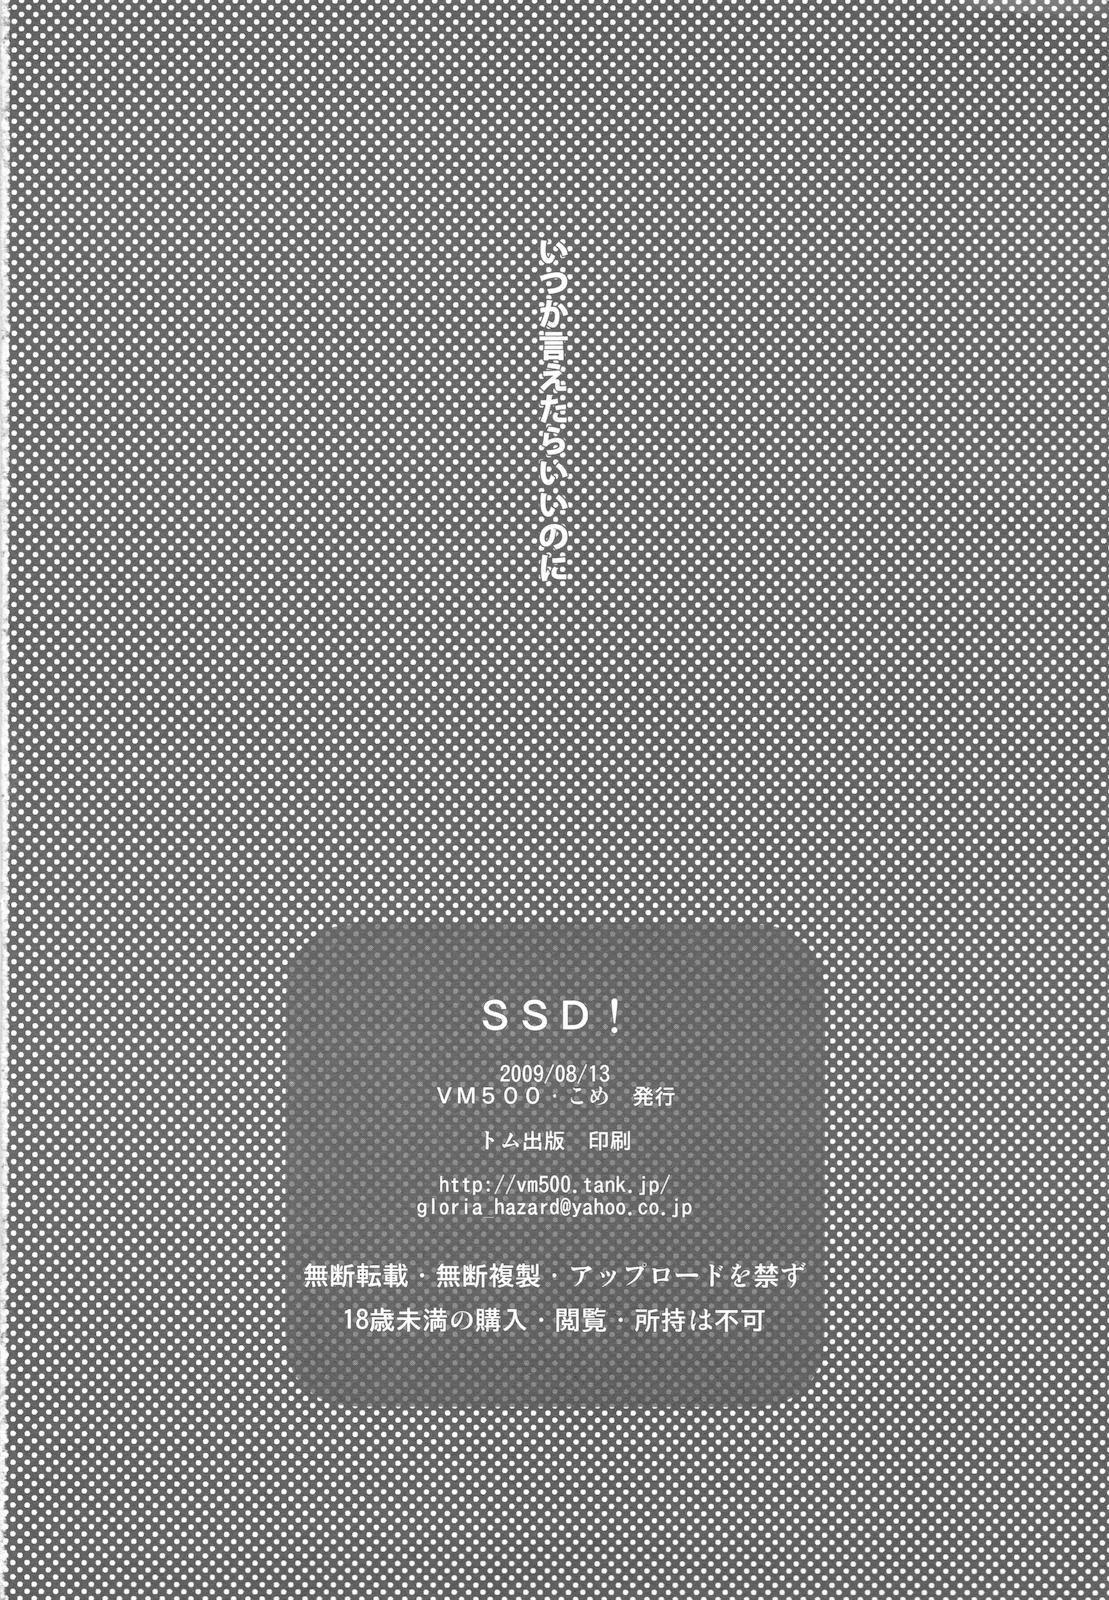 SSD! 121